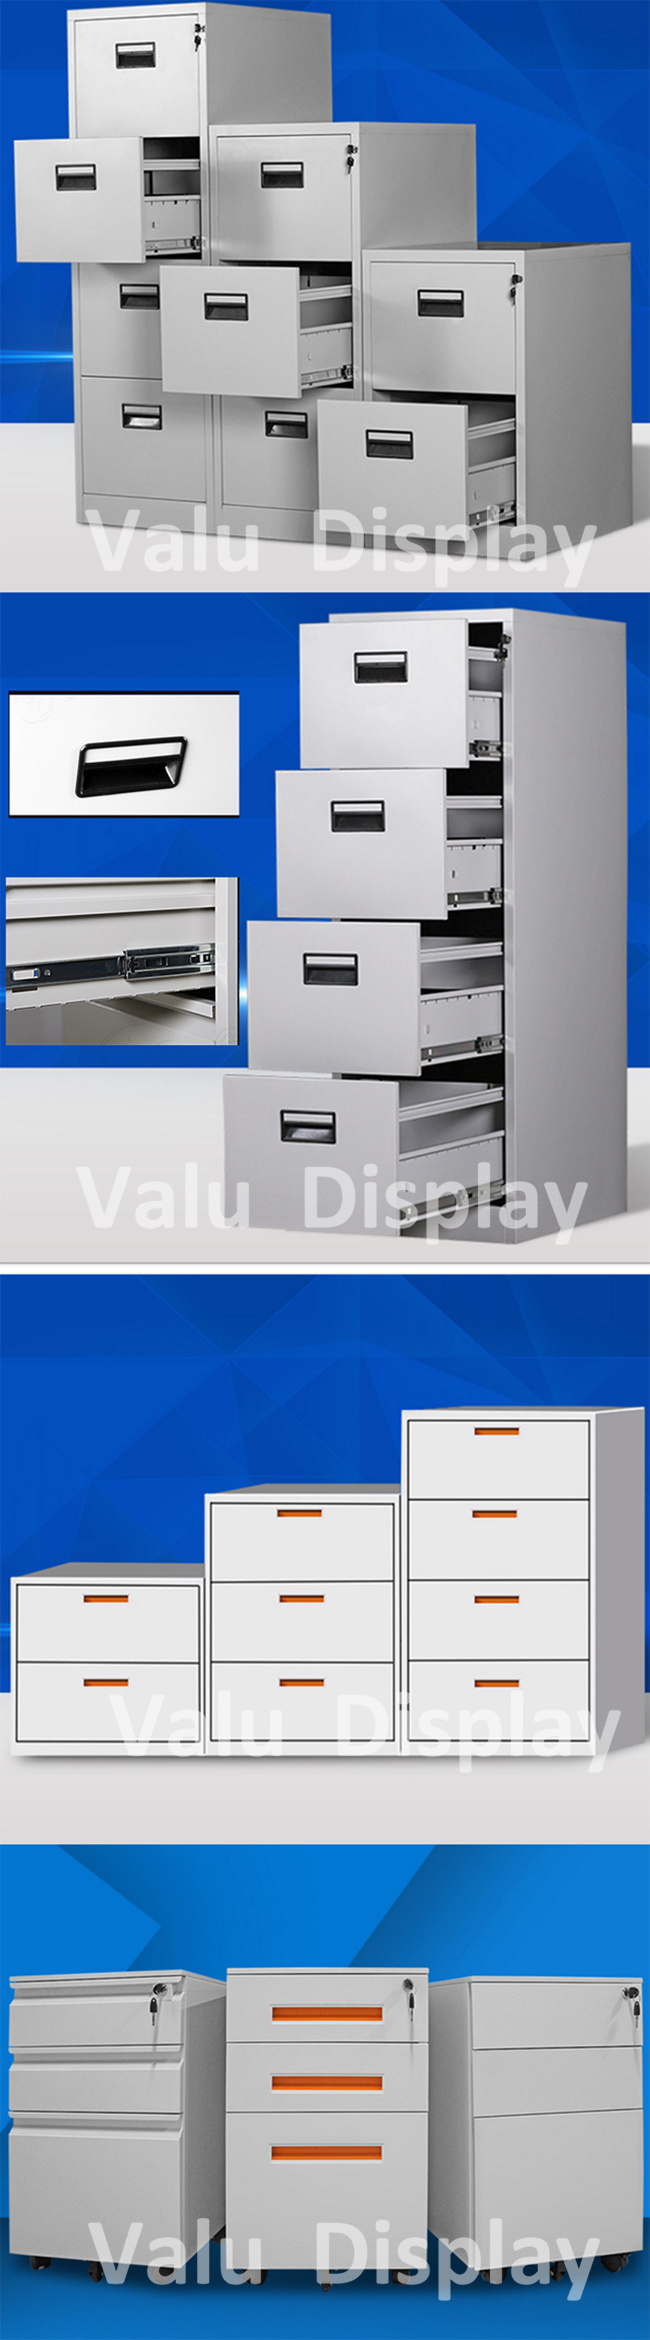 Steel Filing Cabinet /Movable Cabinet /Metal Storage Cabinet / Office Use Steel Movable Cabinet